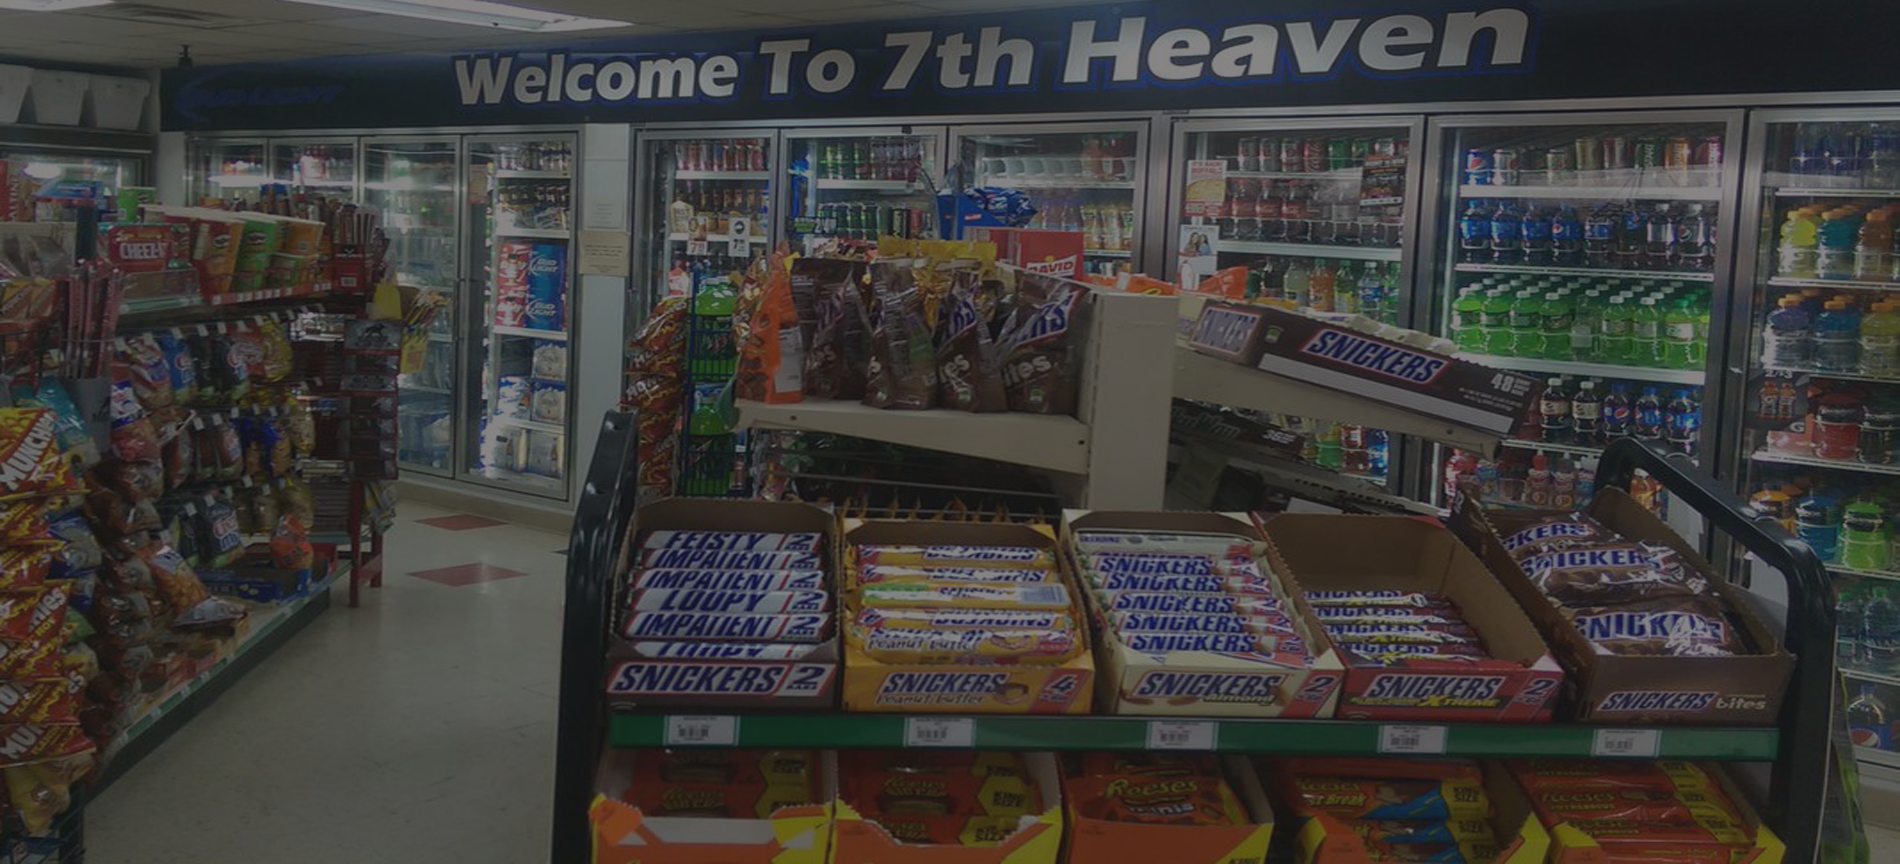 7 Heaven Stores